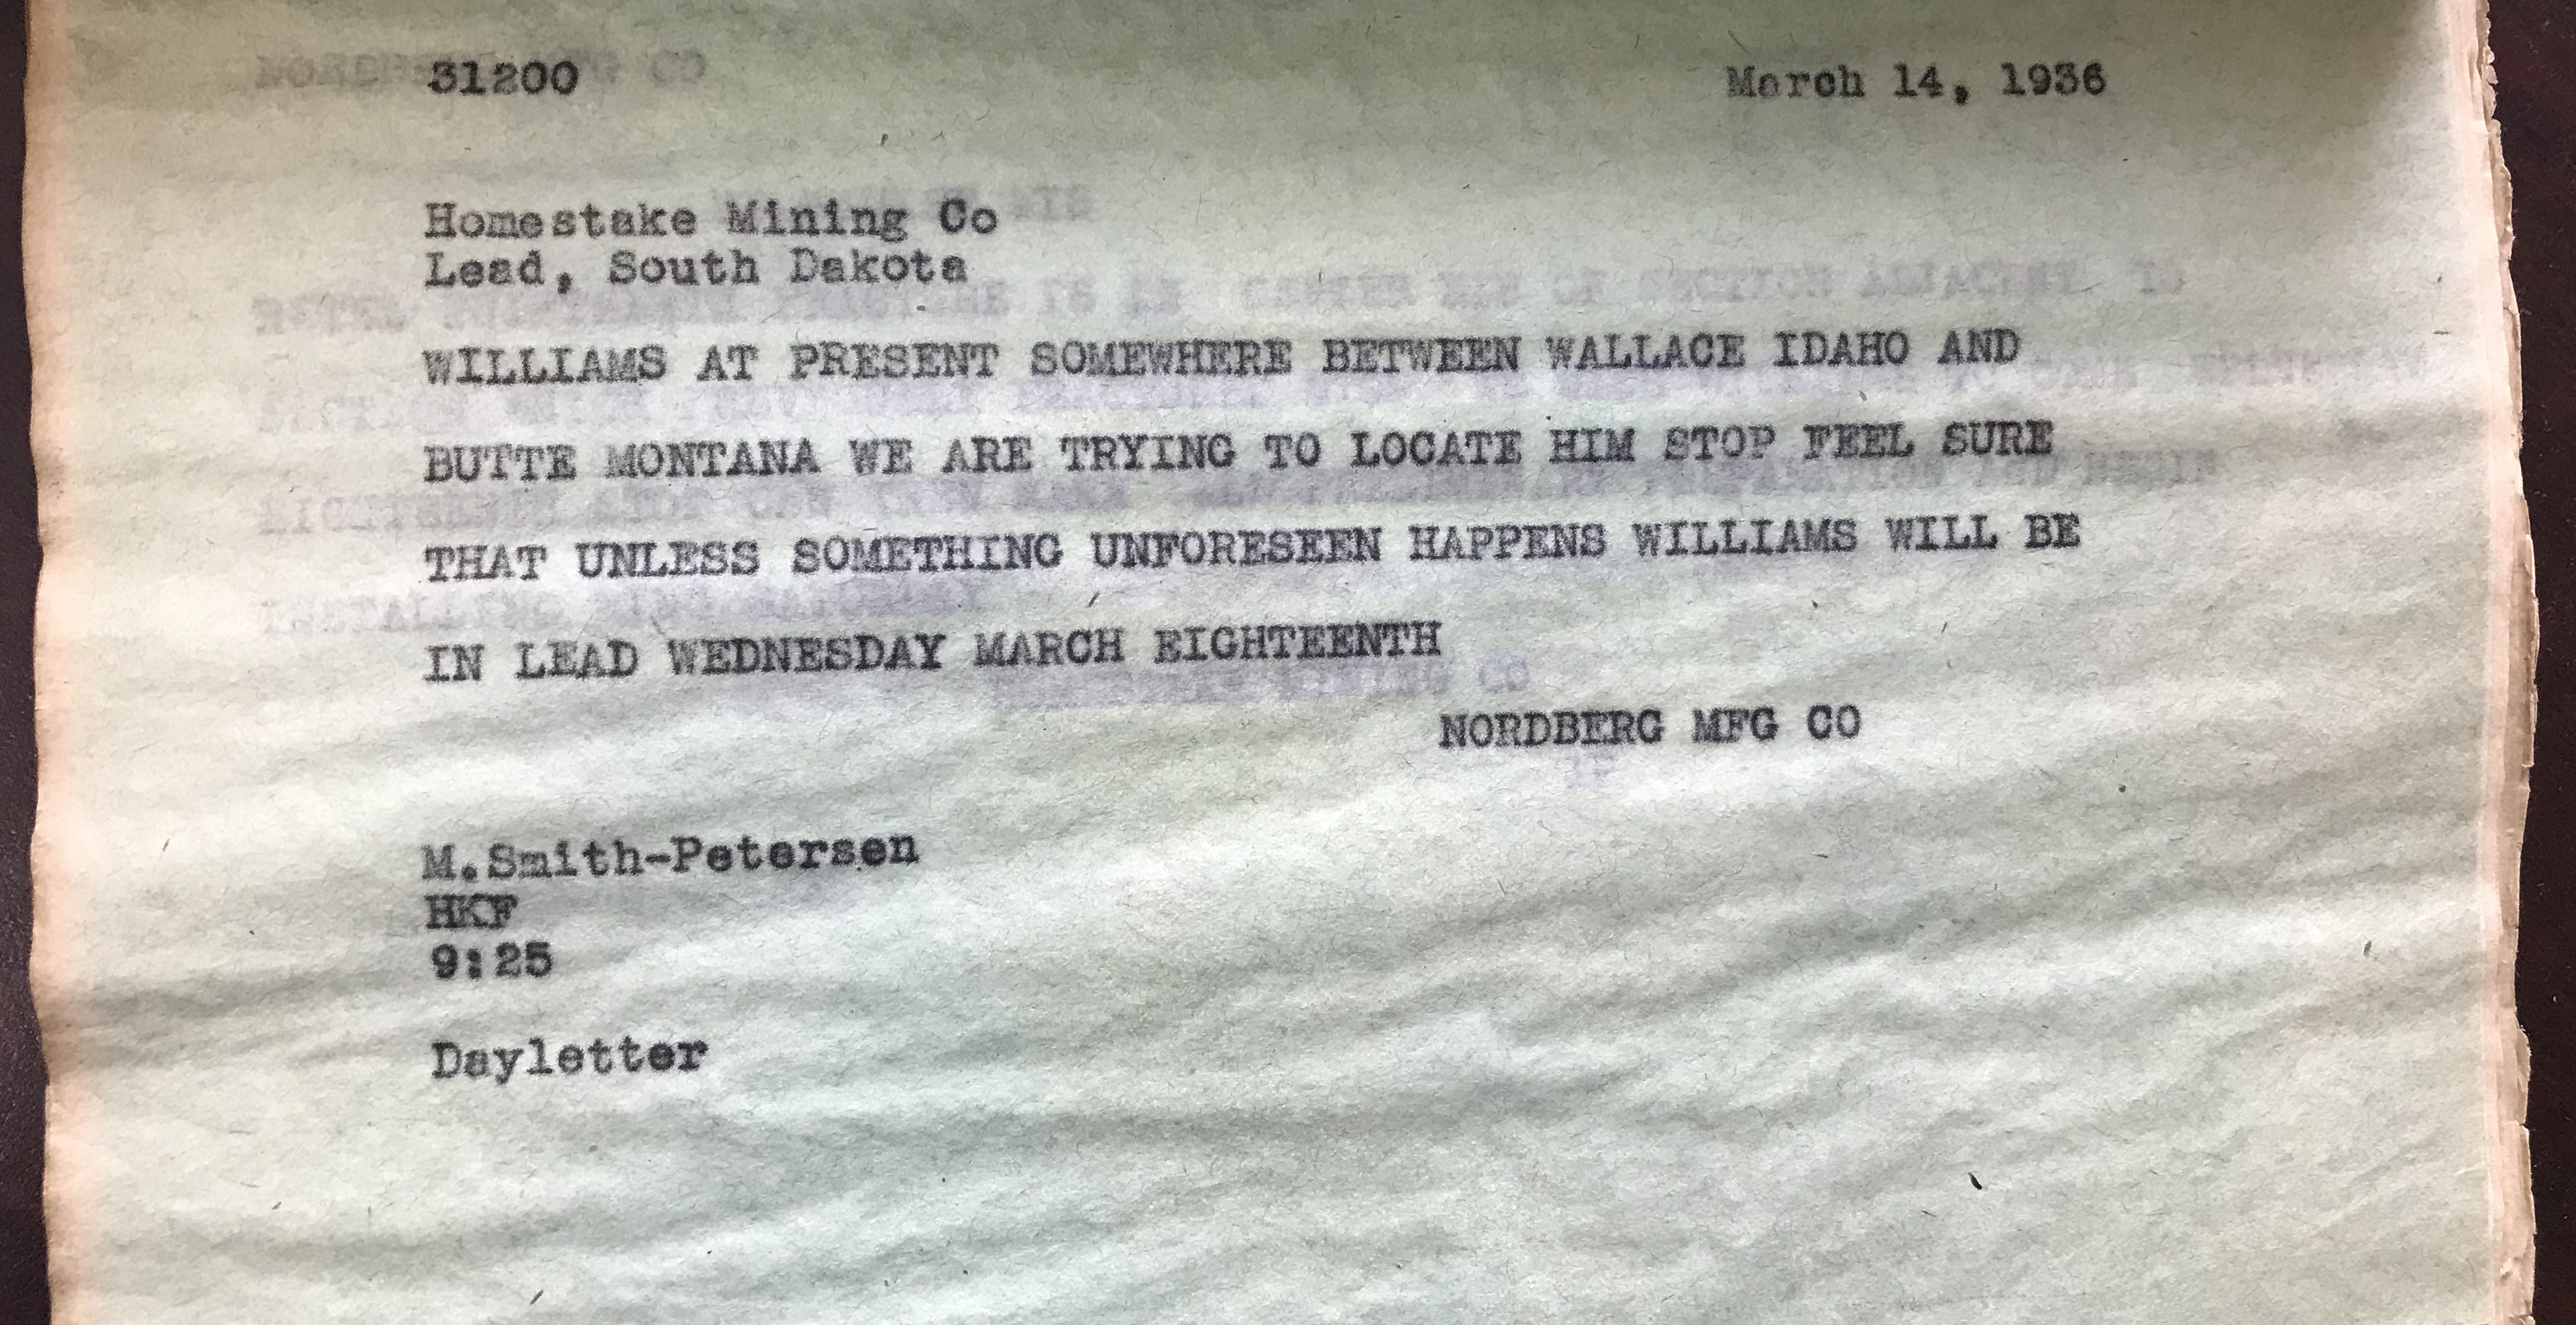 photo of a faded telegram